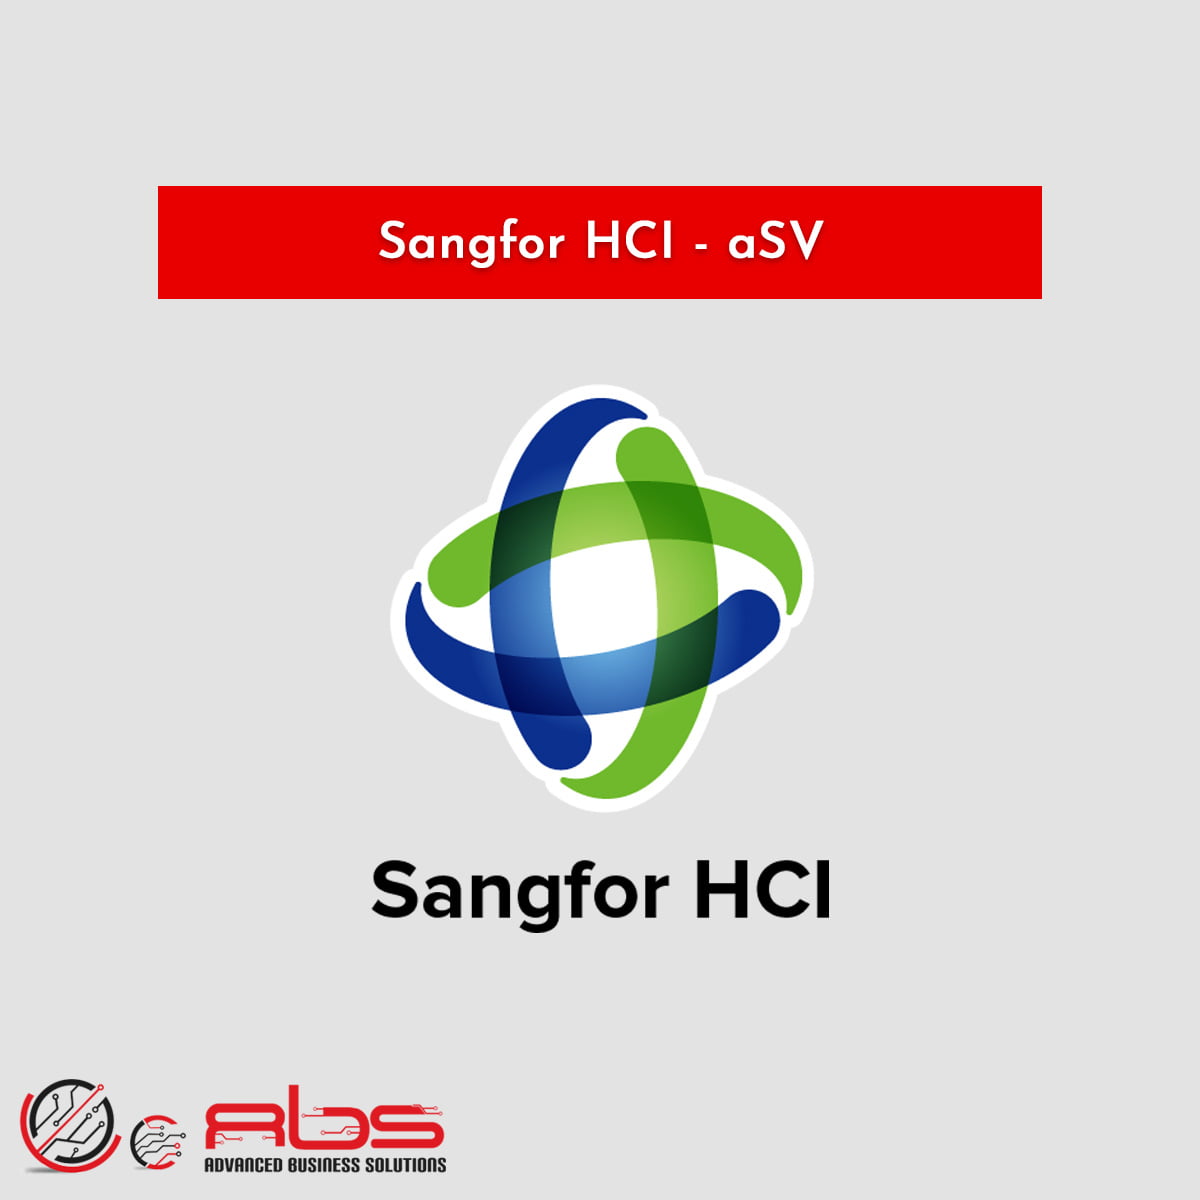 Sangfor HCI - aSV